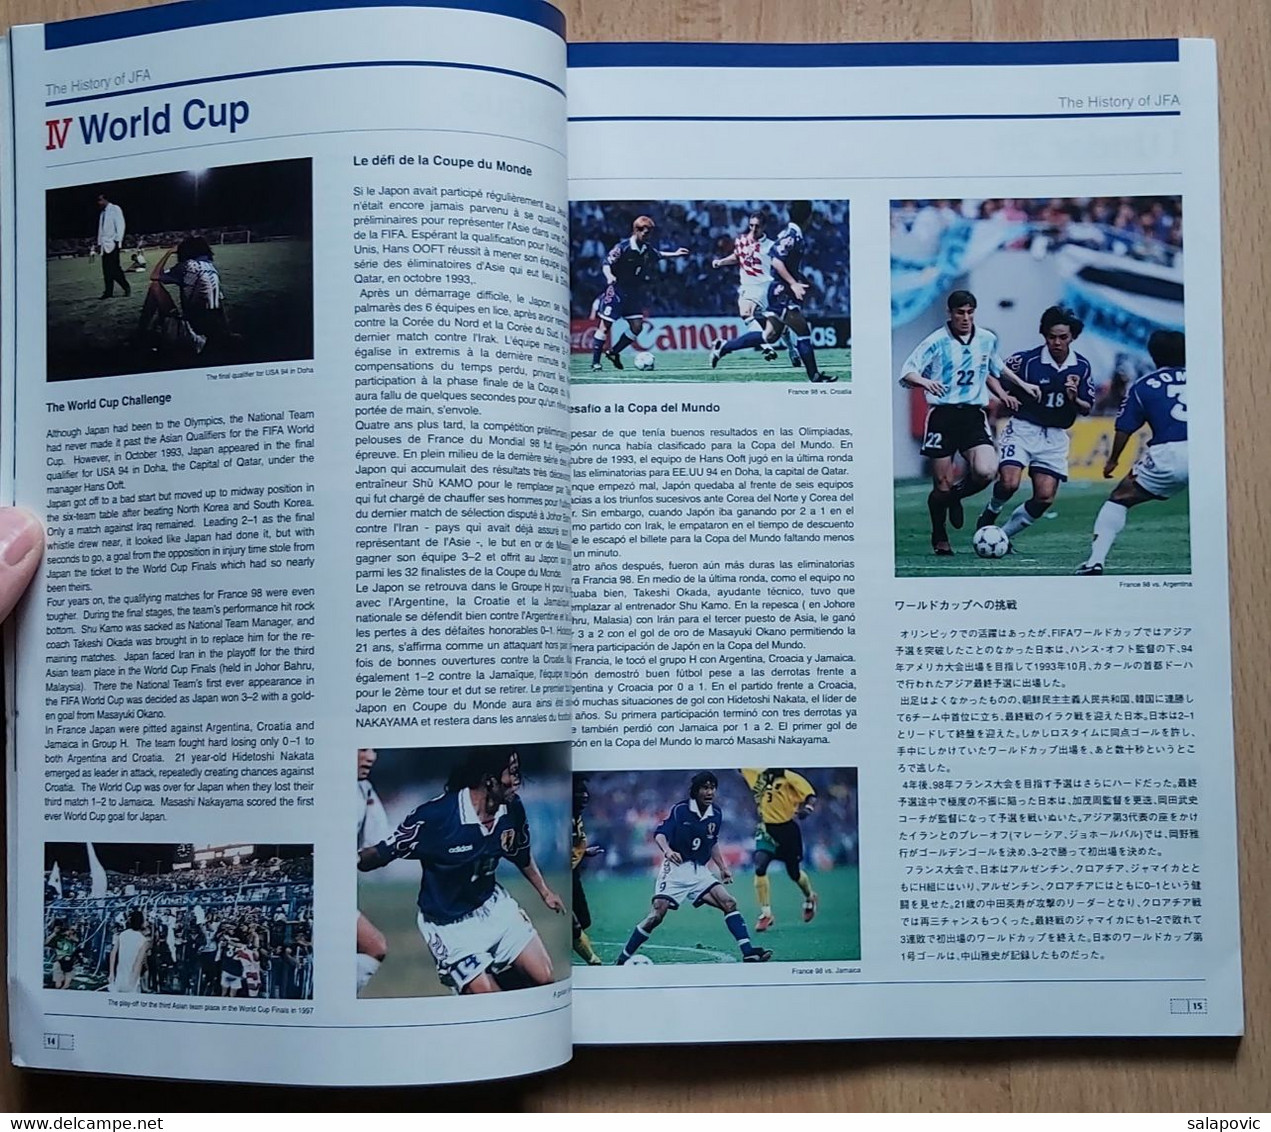 Japan National Team Media Guide 2002 FIFA World Cup Korea/ Japan, Japan Football Association